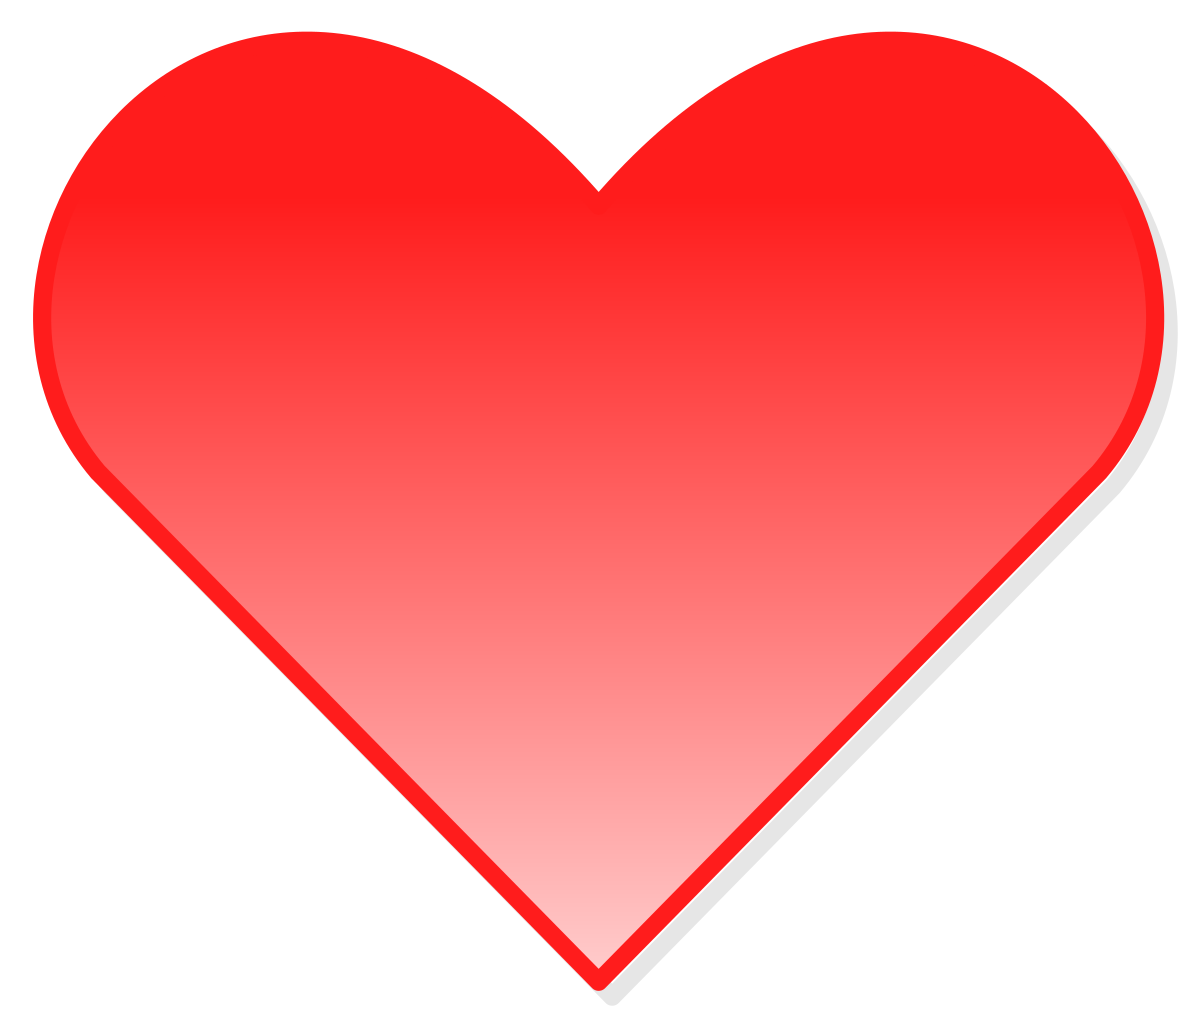 File:Alone heart rounak.jpg - Wikipedia